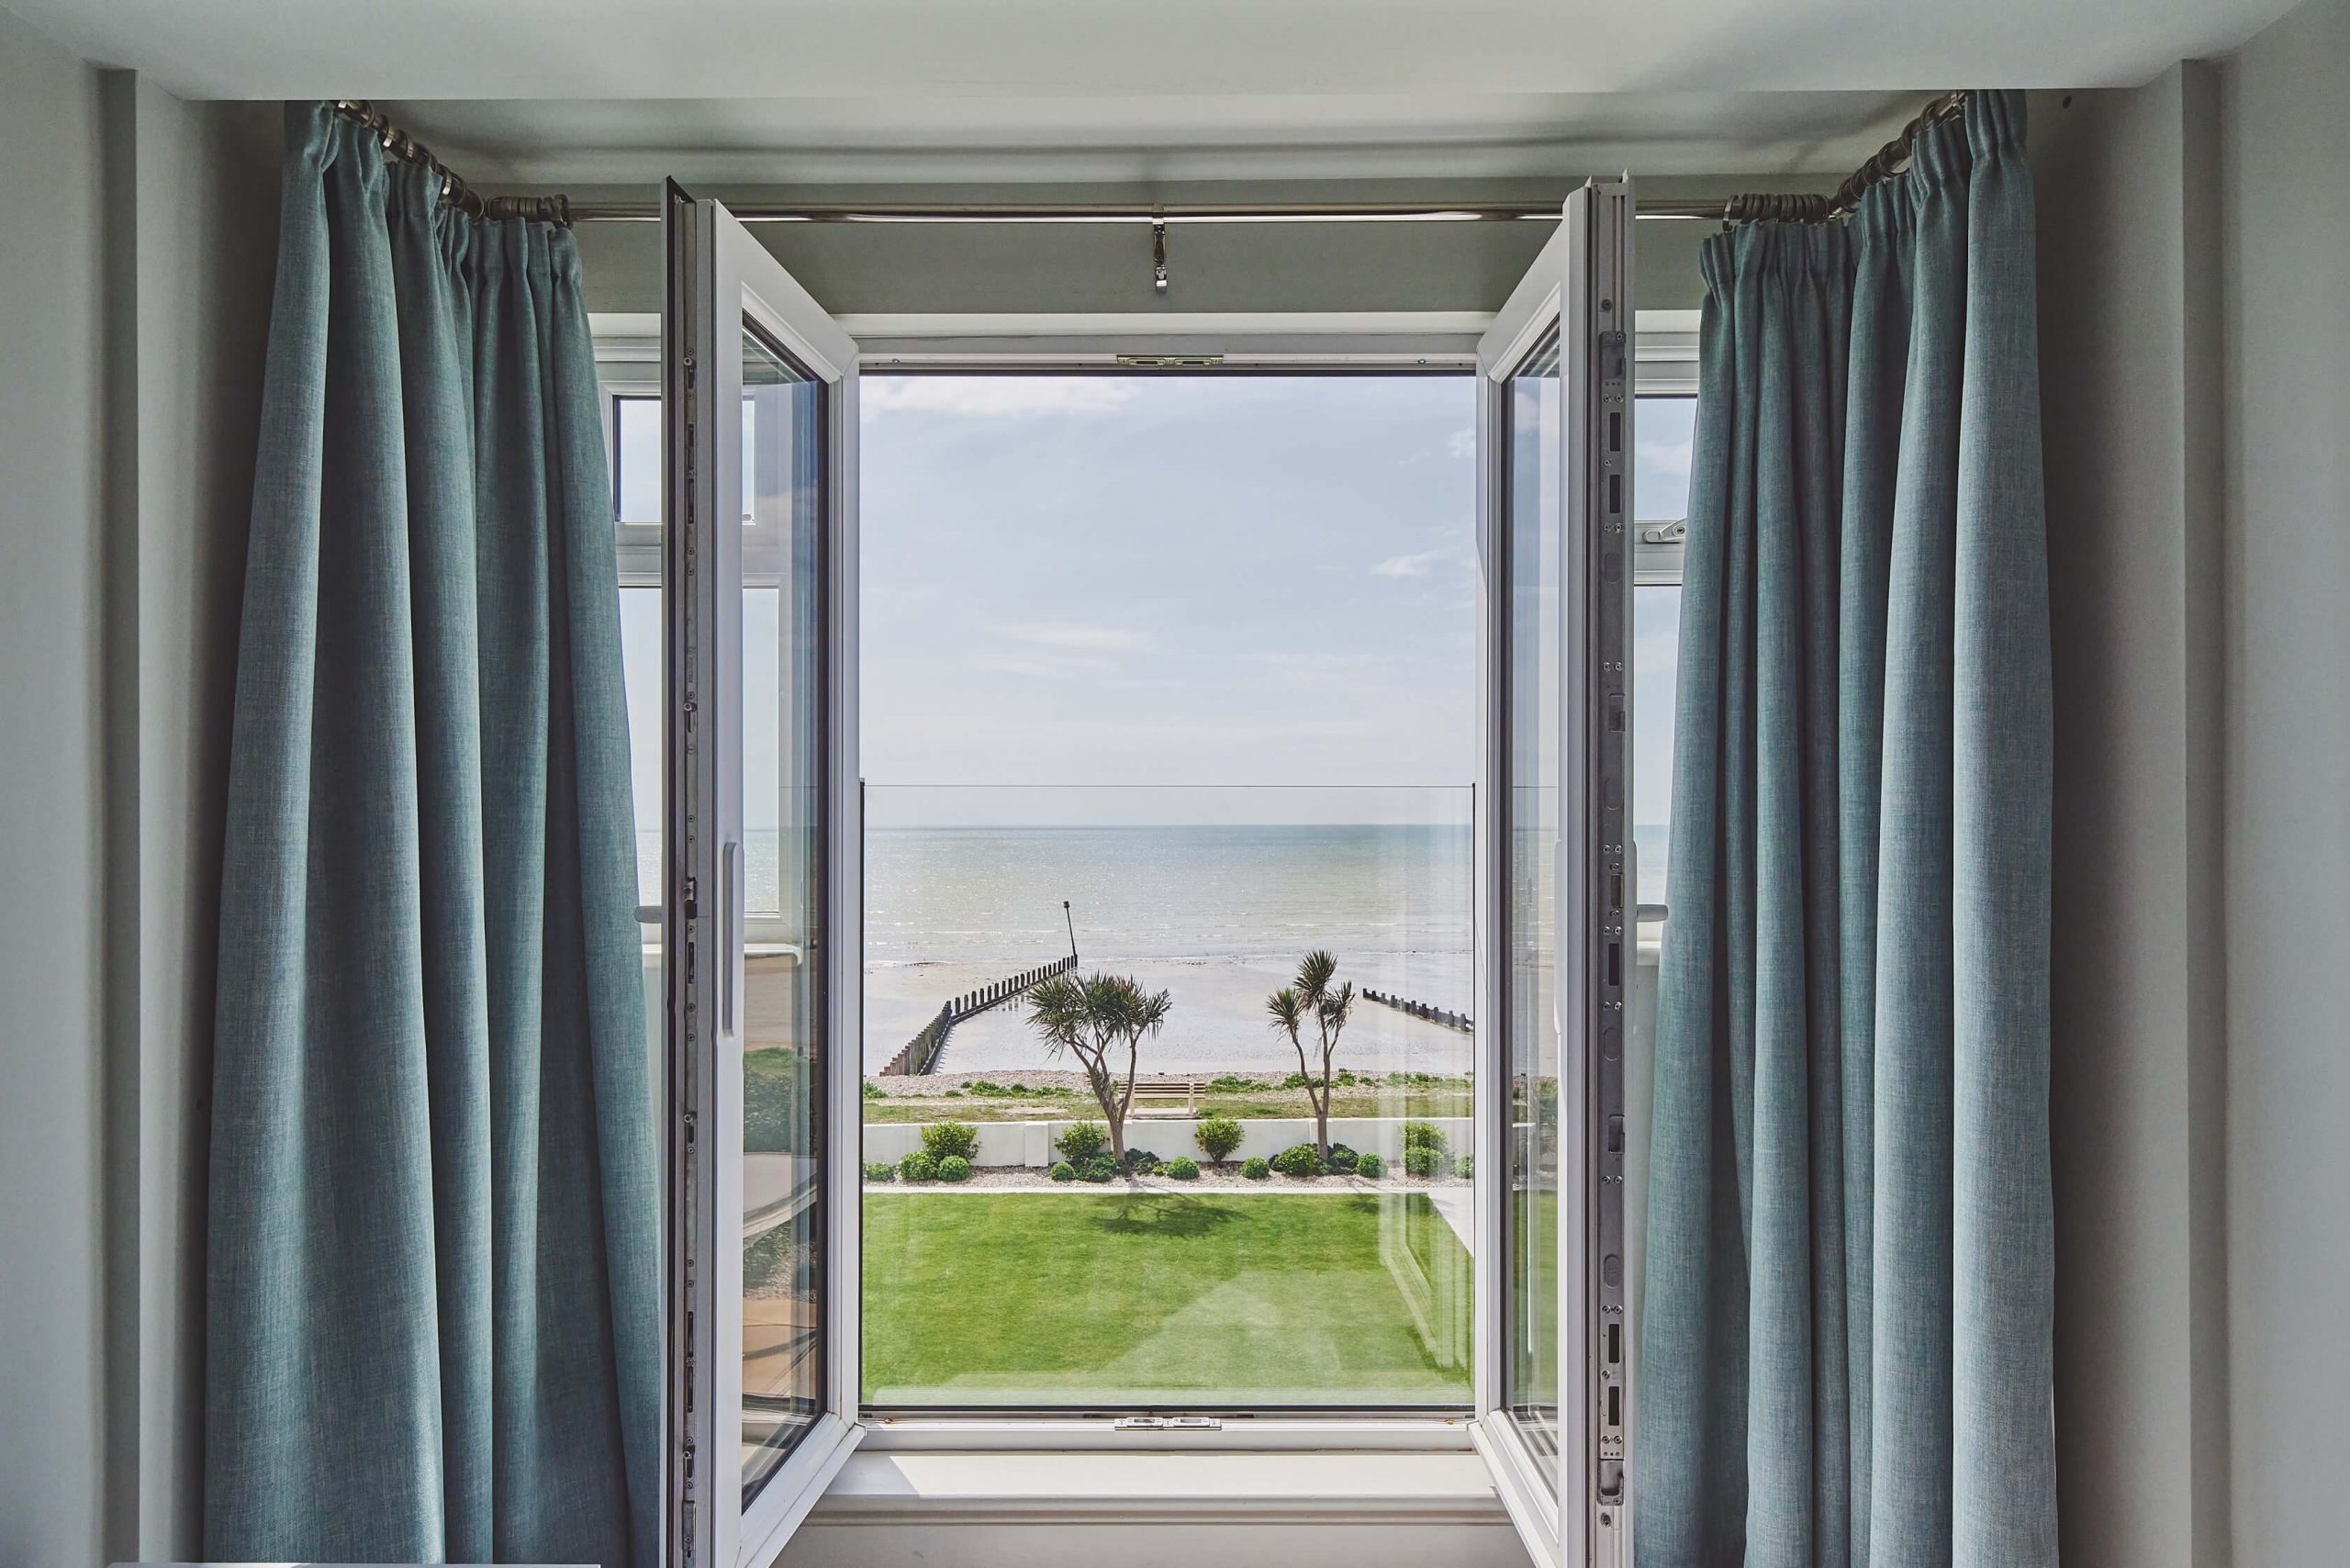 sea views, Beachfront views, beach views, balcony beach views, beach accommodation, beach house